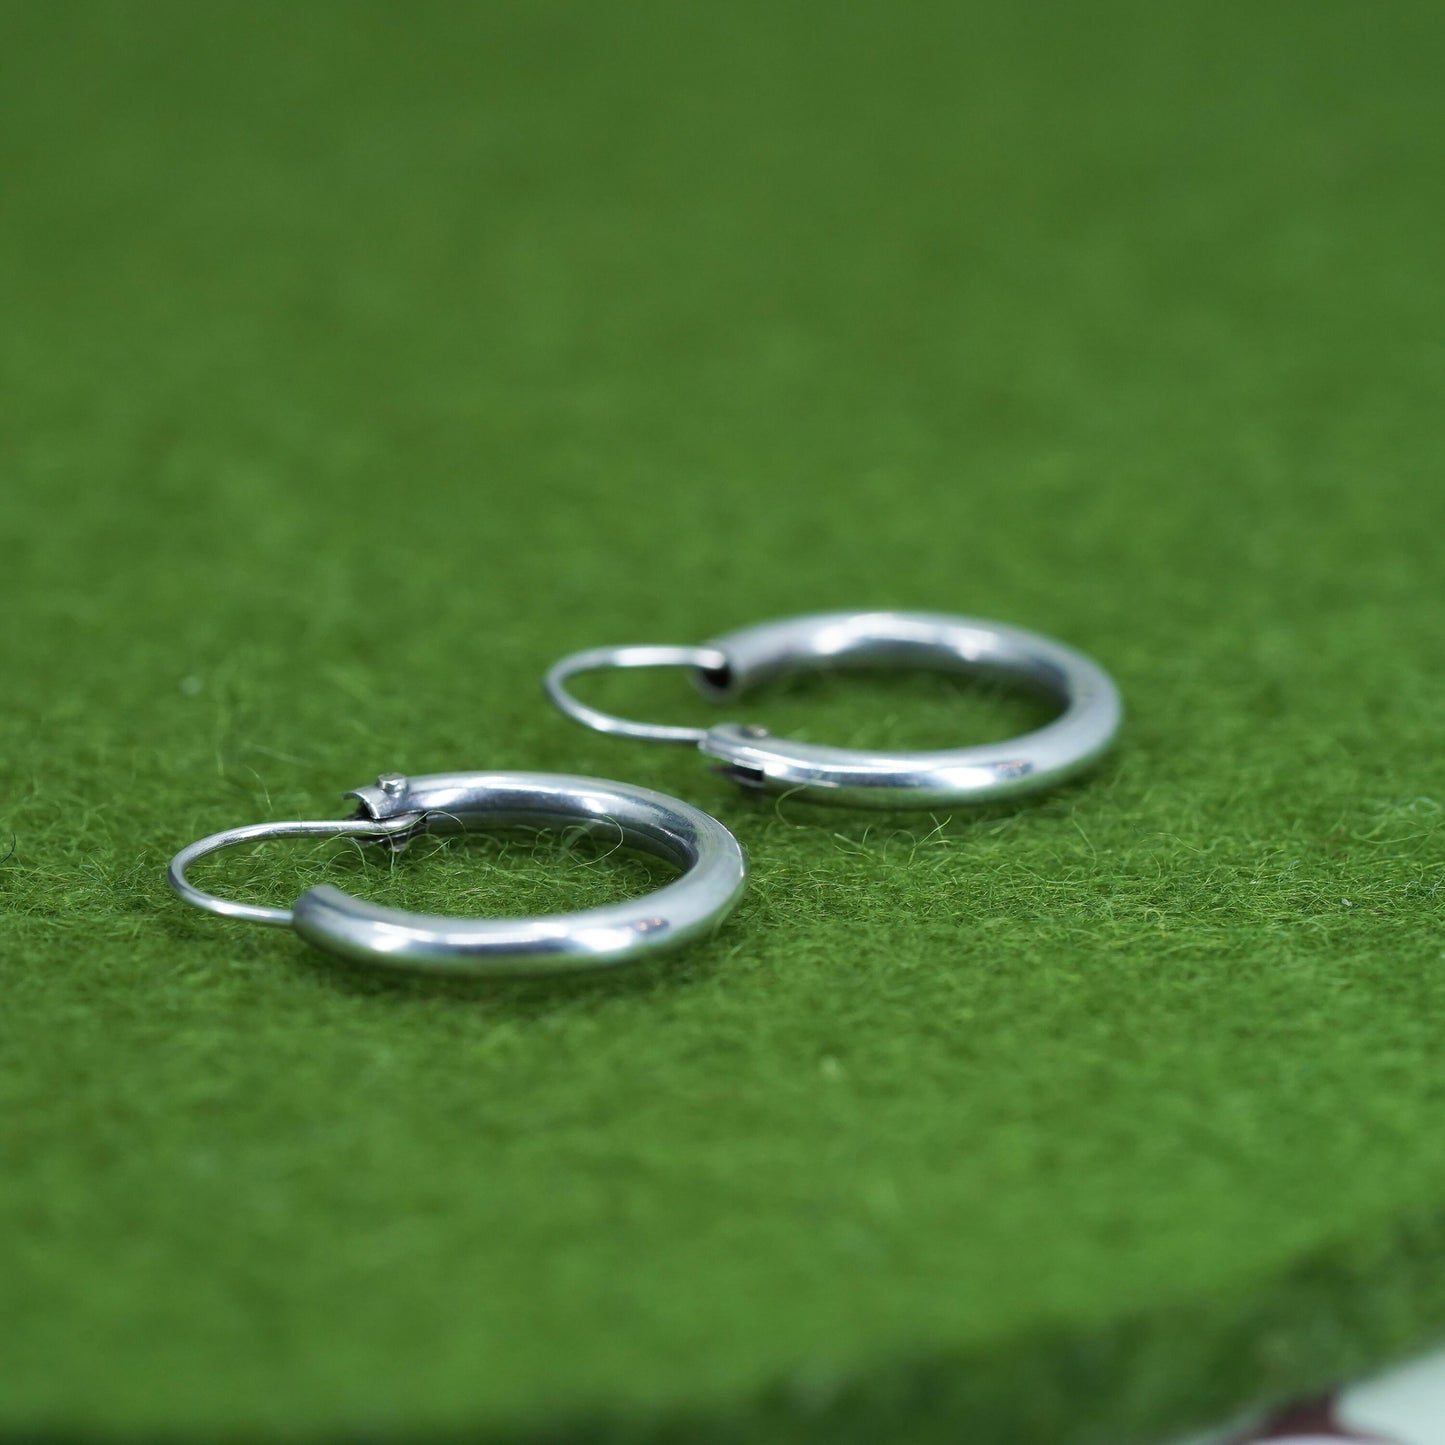 0.5", Vintage sterling silver loop earrings, fashion, fine 925 silver hoops